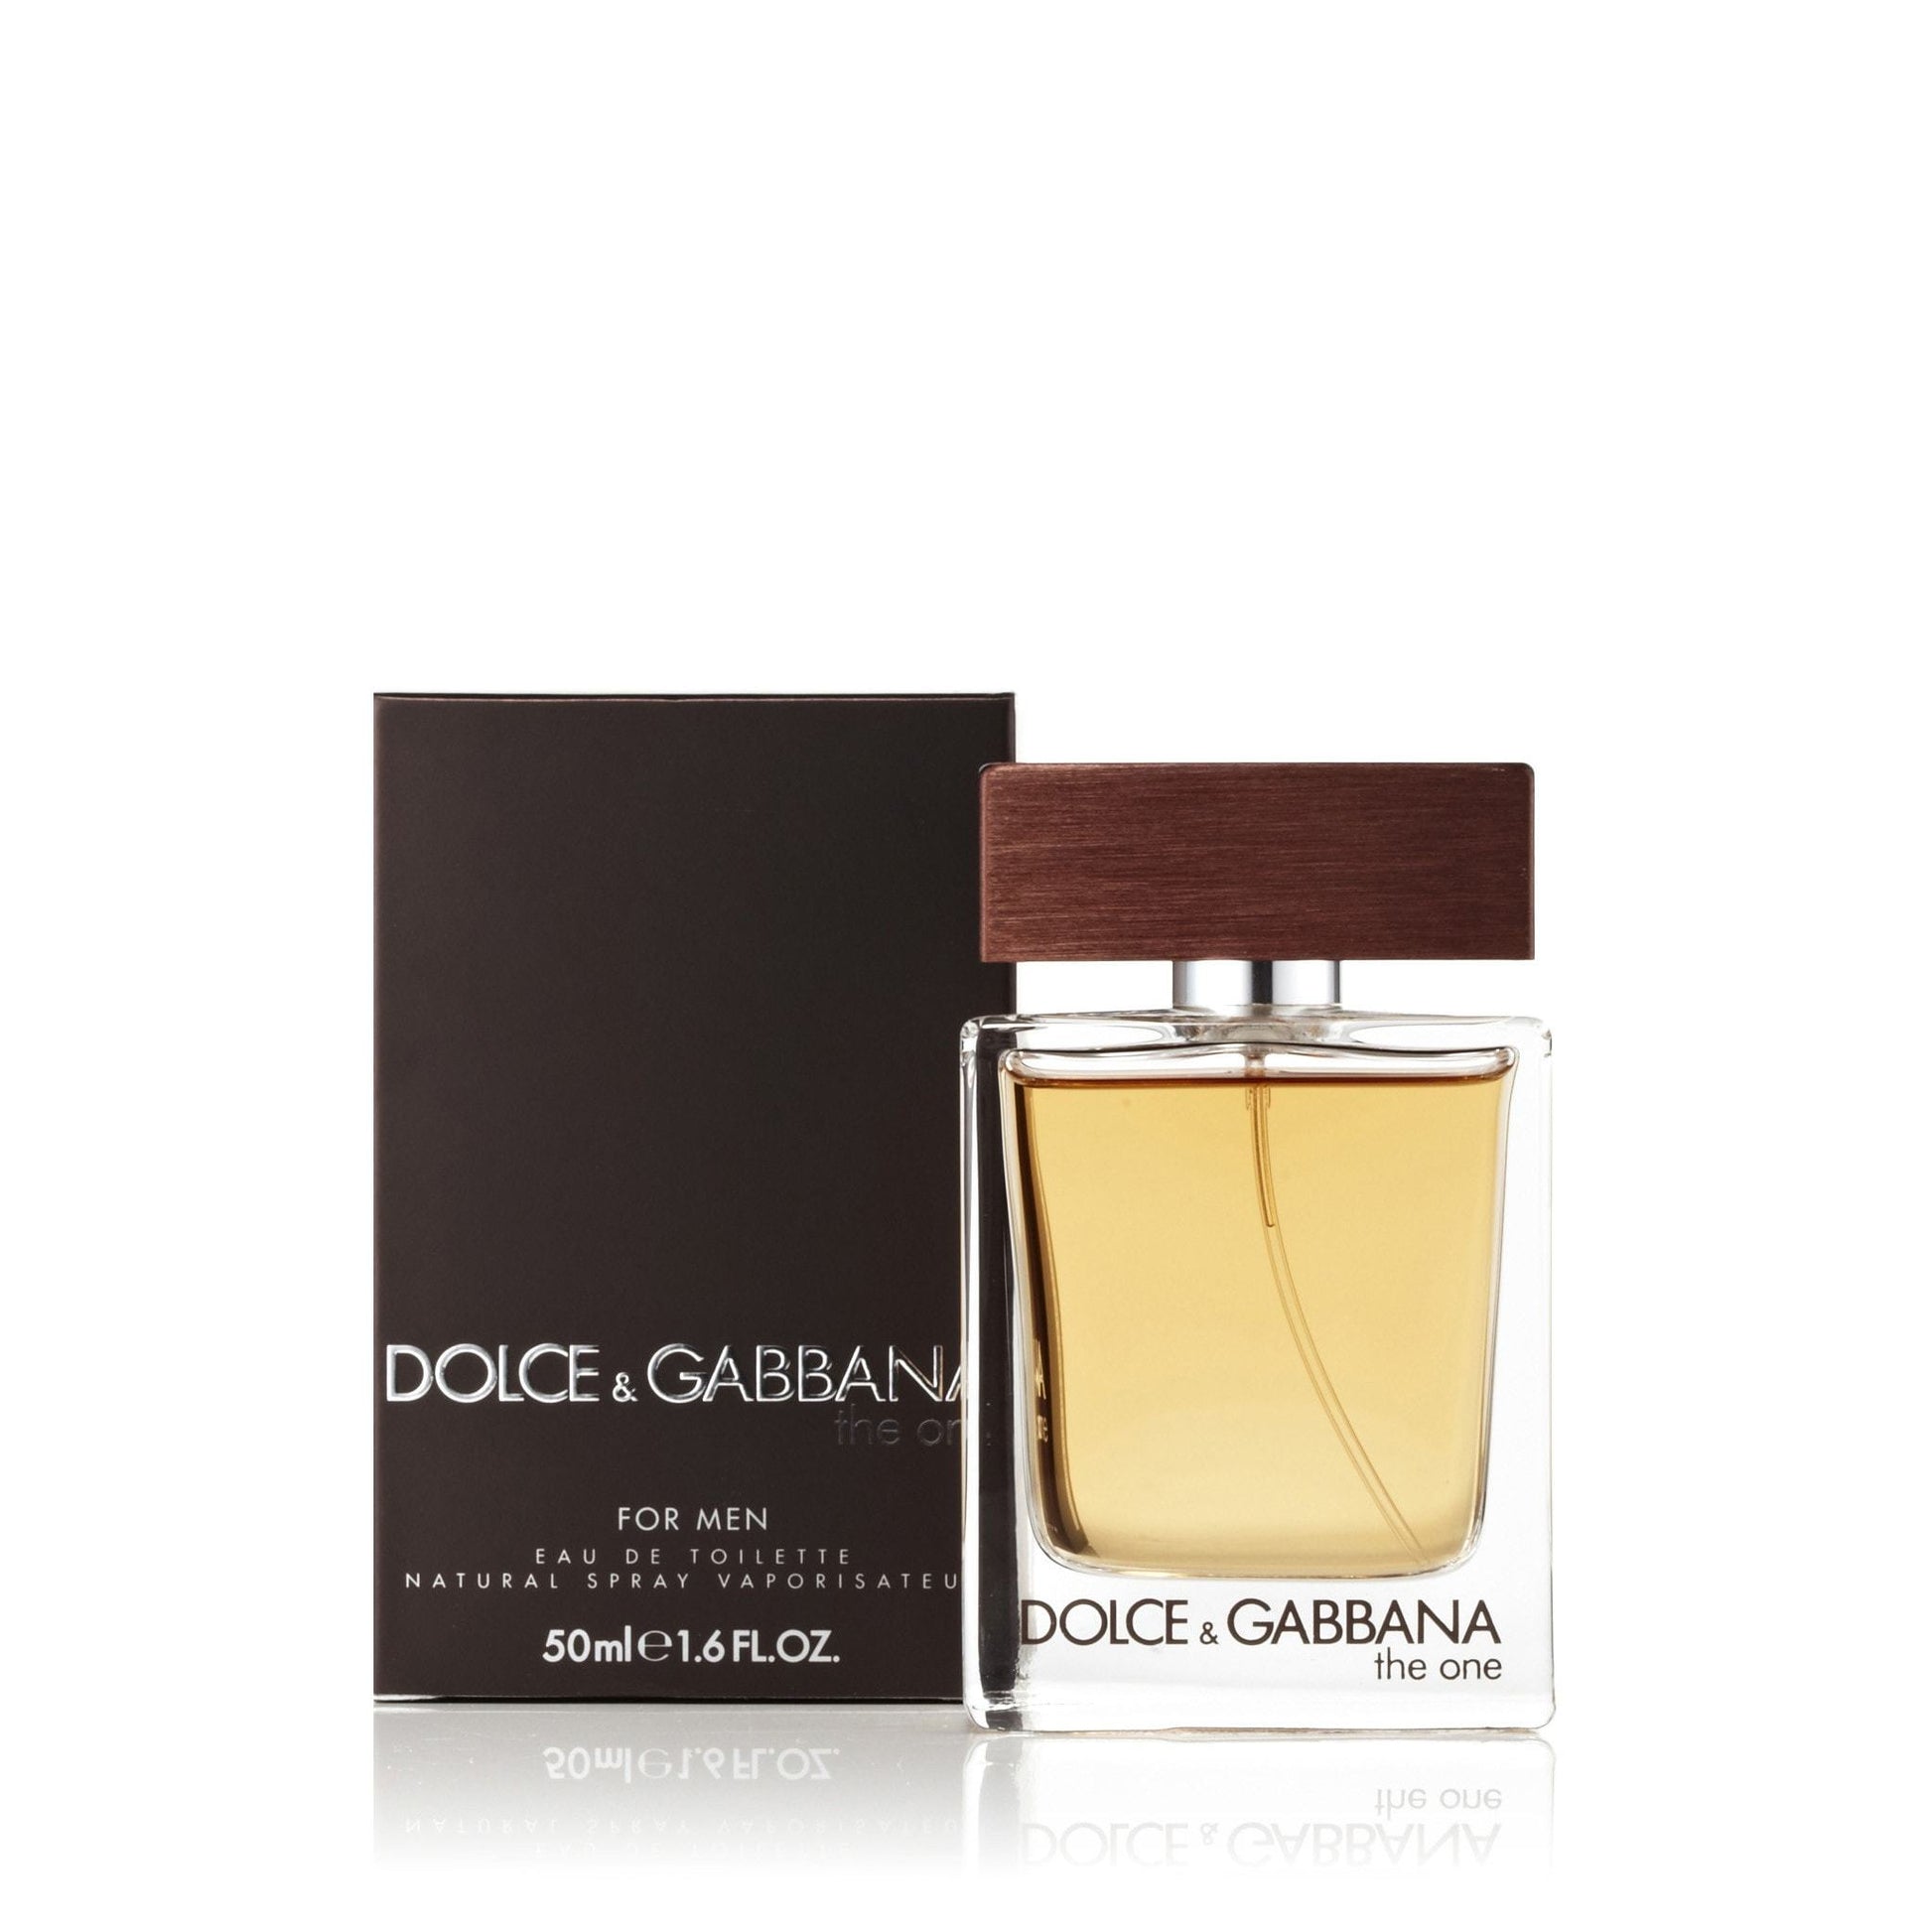 The One Eau de Toilette Spray for Men by Dolce & Gabbana, Product image 3